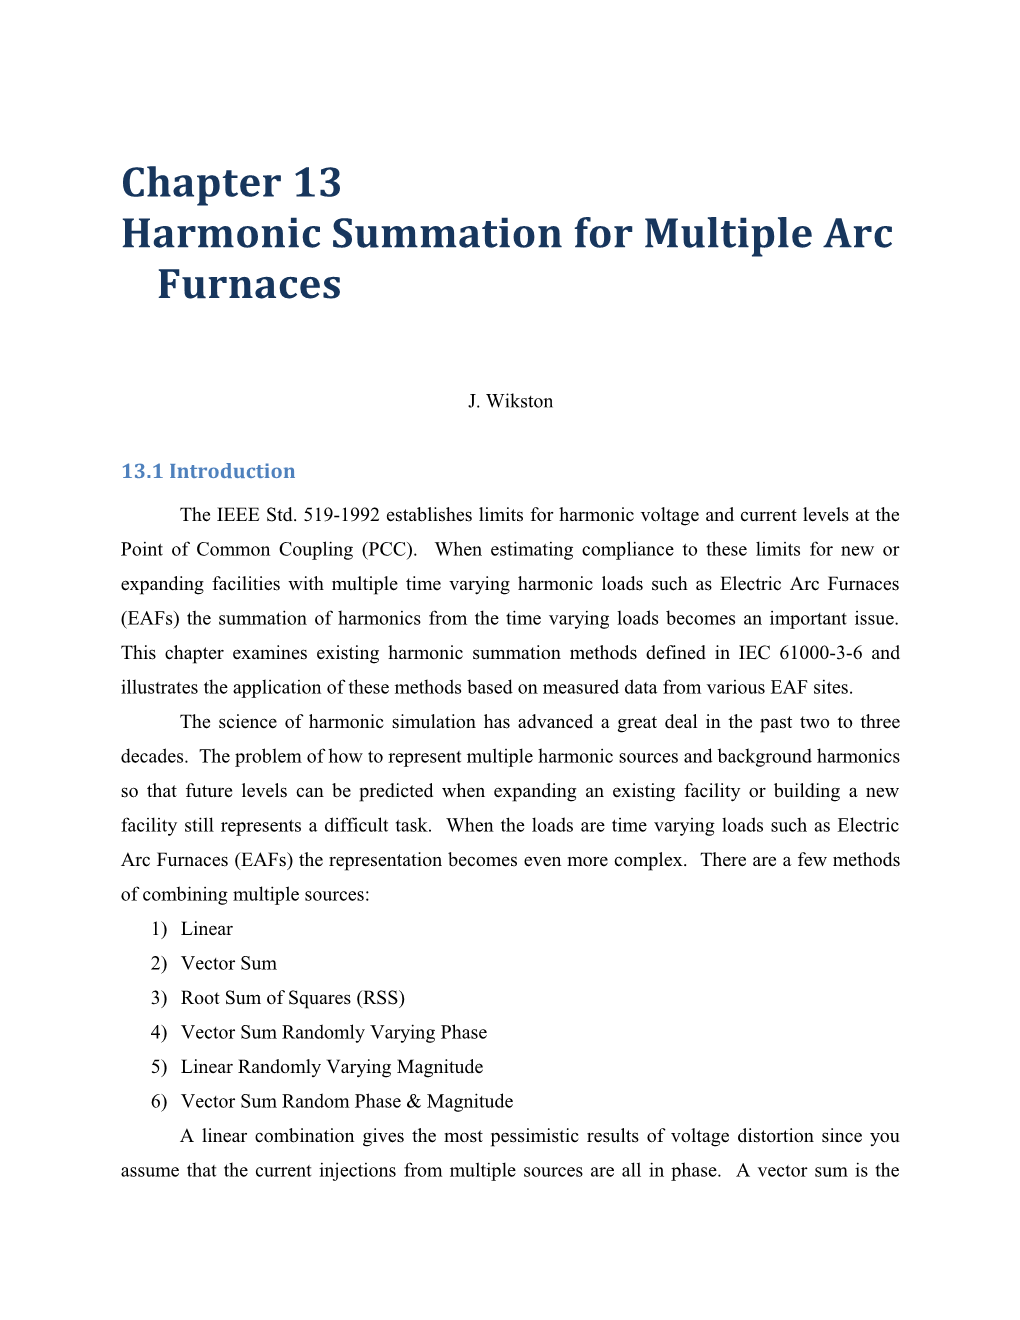 Harmonic Summation for Multiple Arc Furnaces